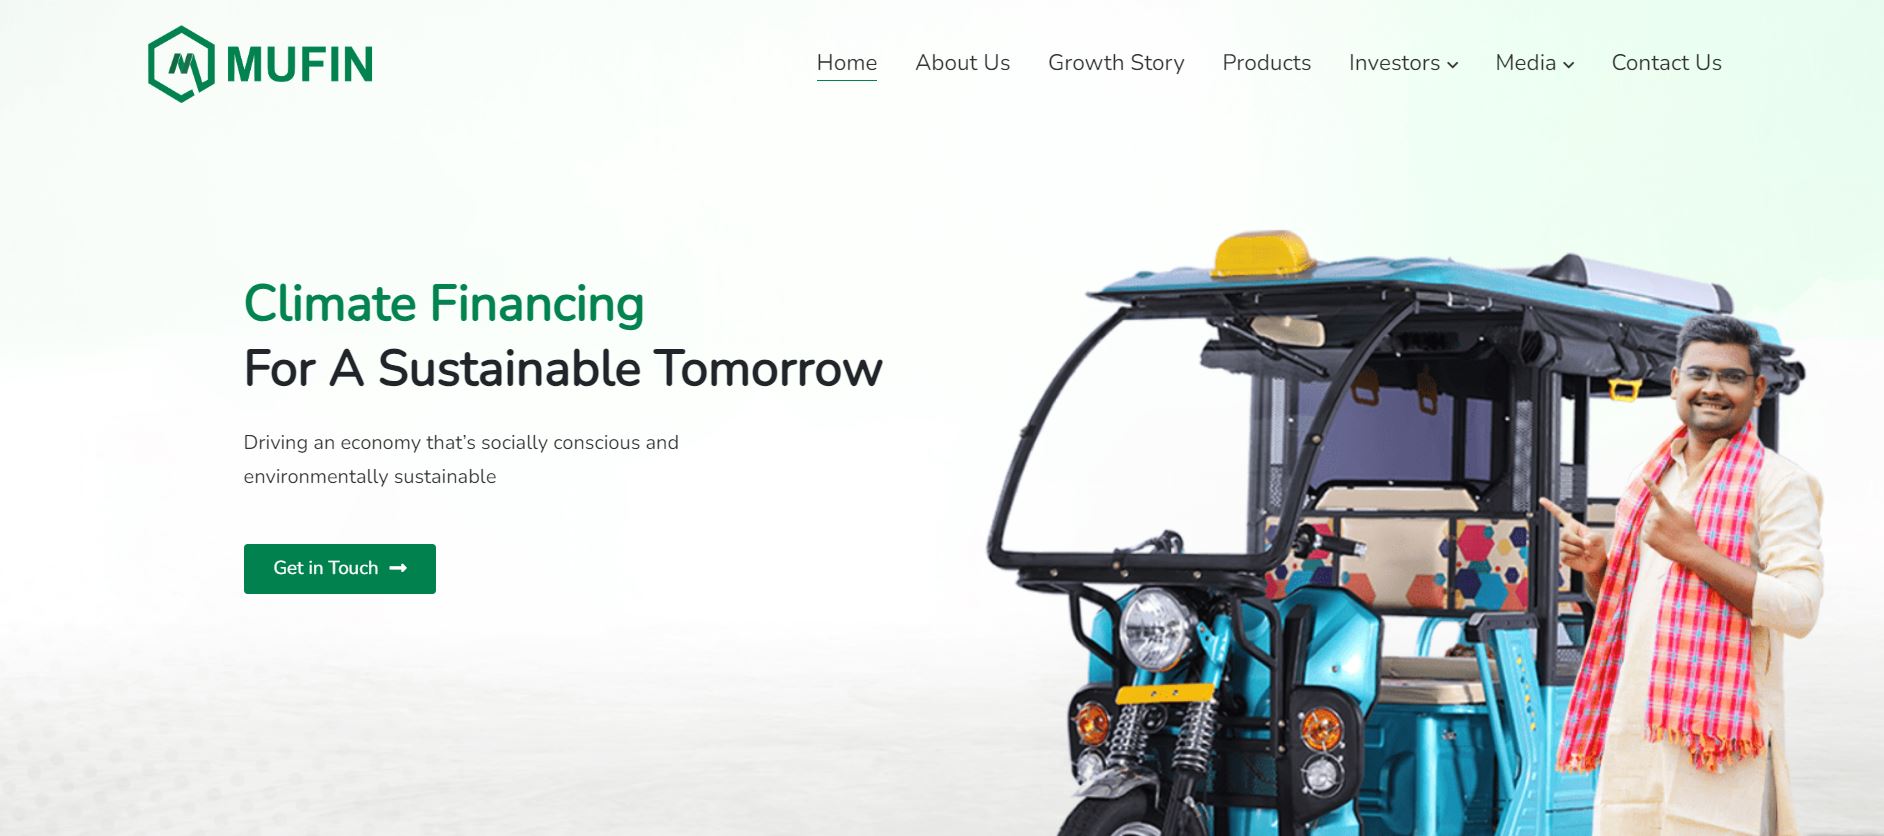 Mufin Green Finance: Forward-thinking startup founded by Kapil Garg raises $1M.